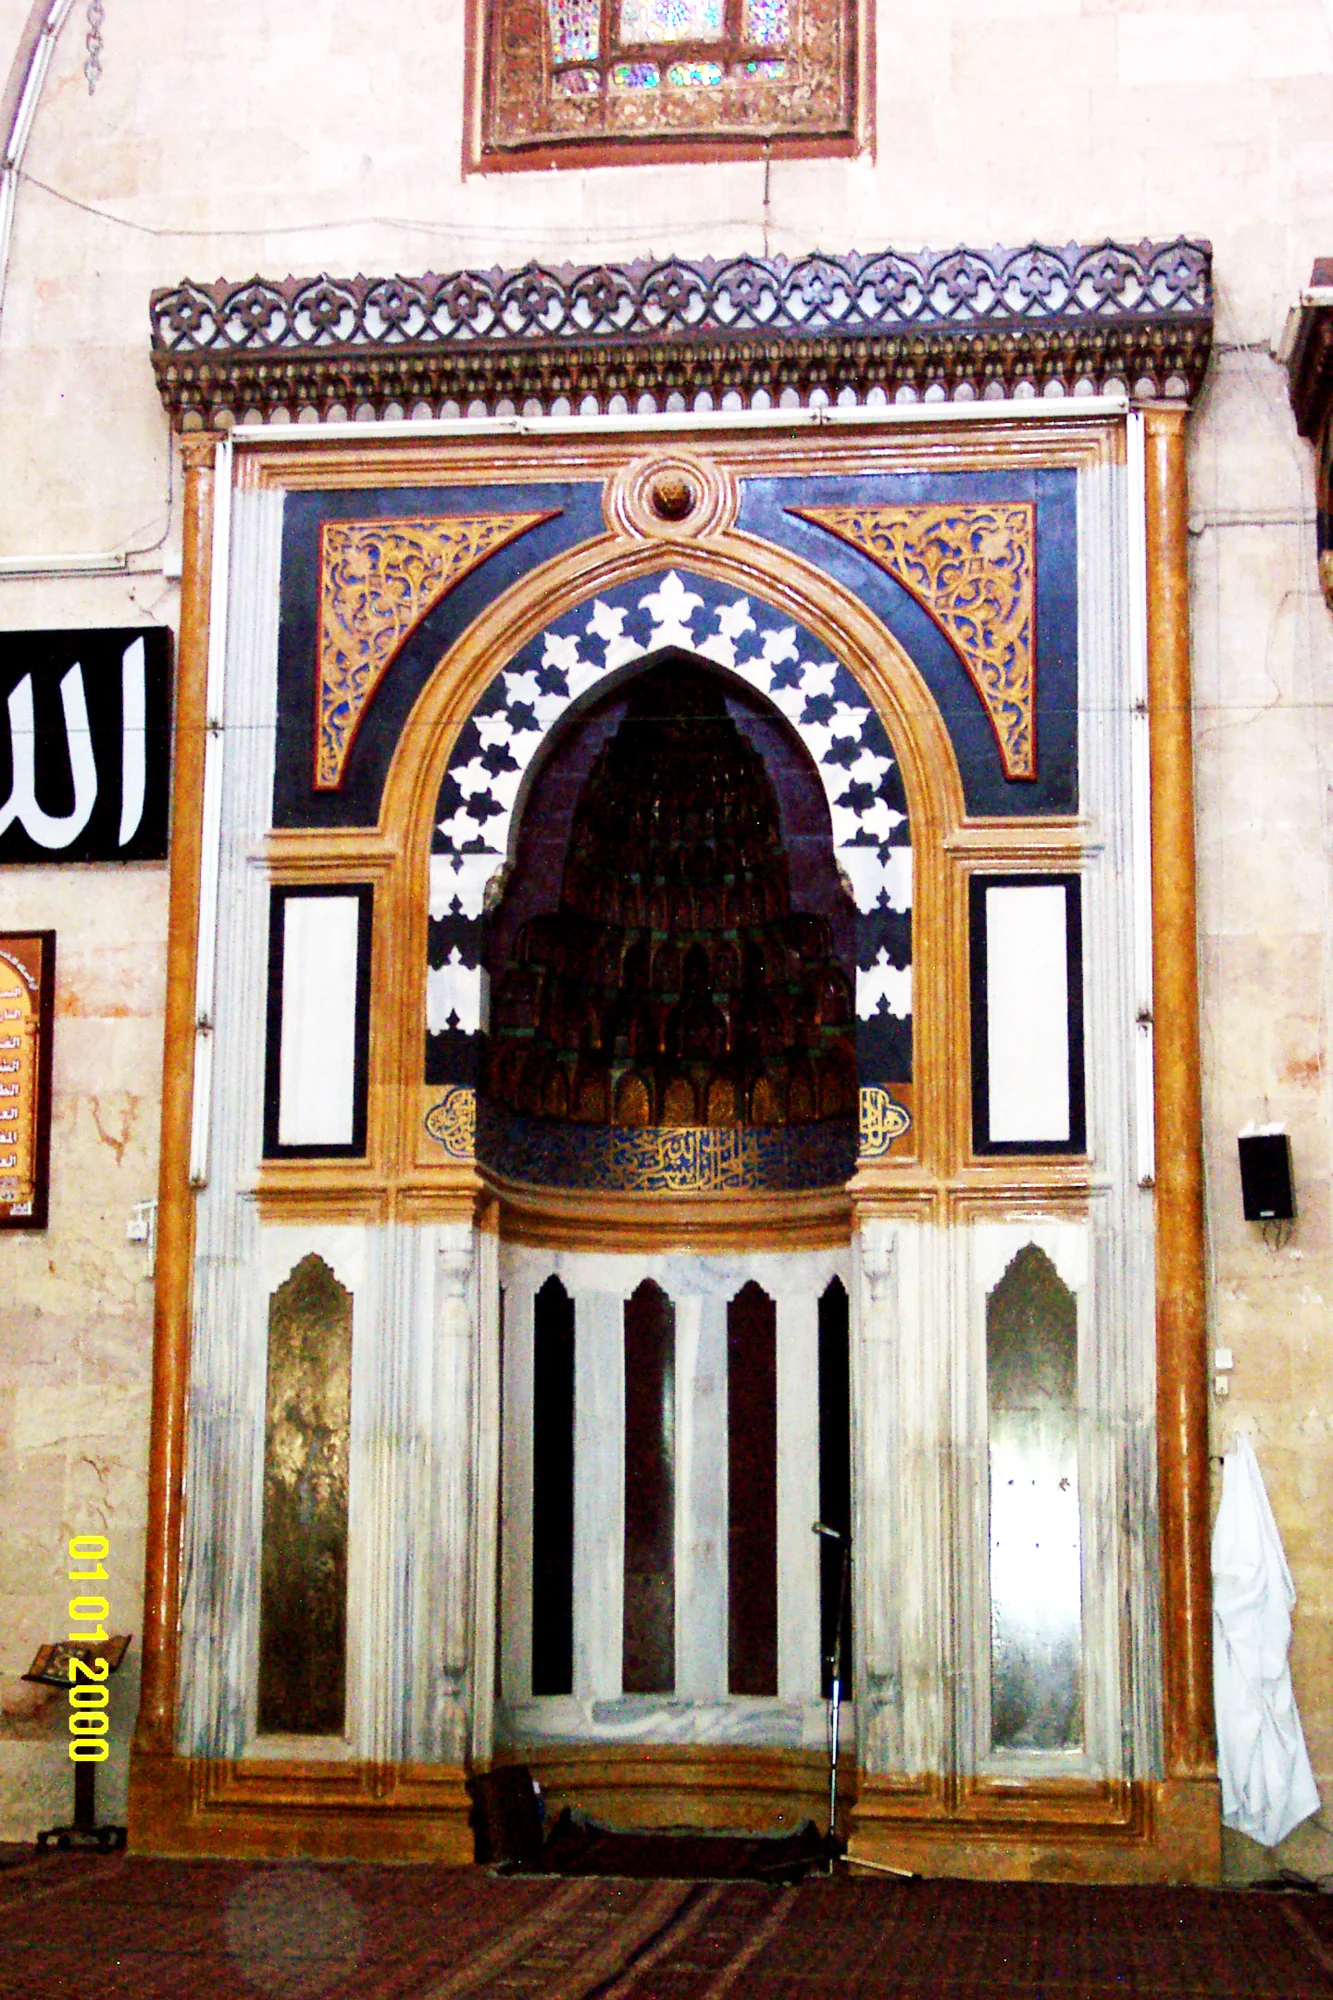 Jamiʿ al-ʿAdiliyya, the prayer niche